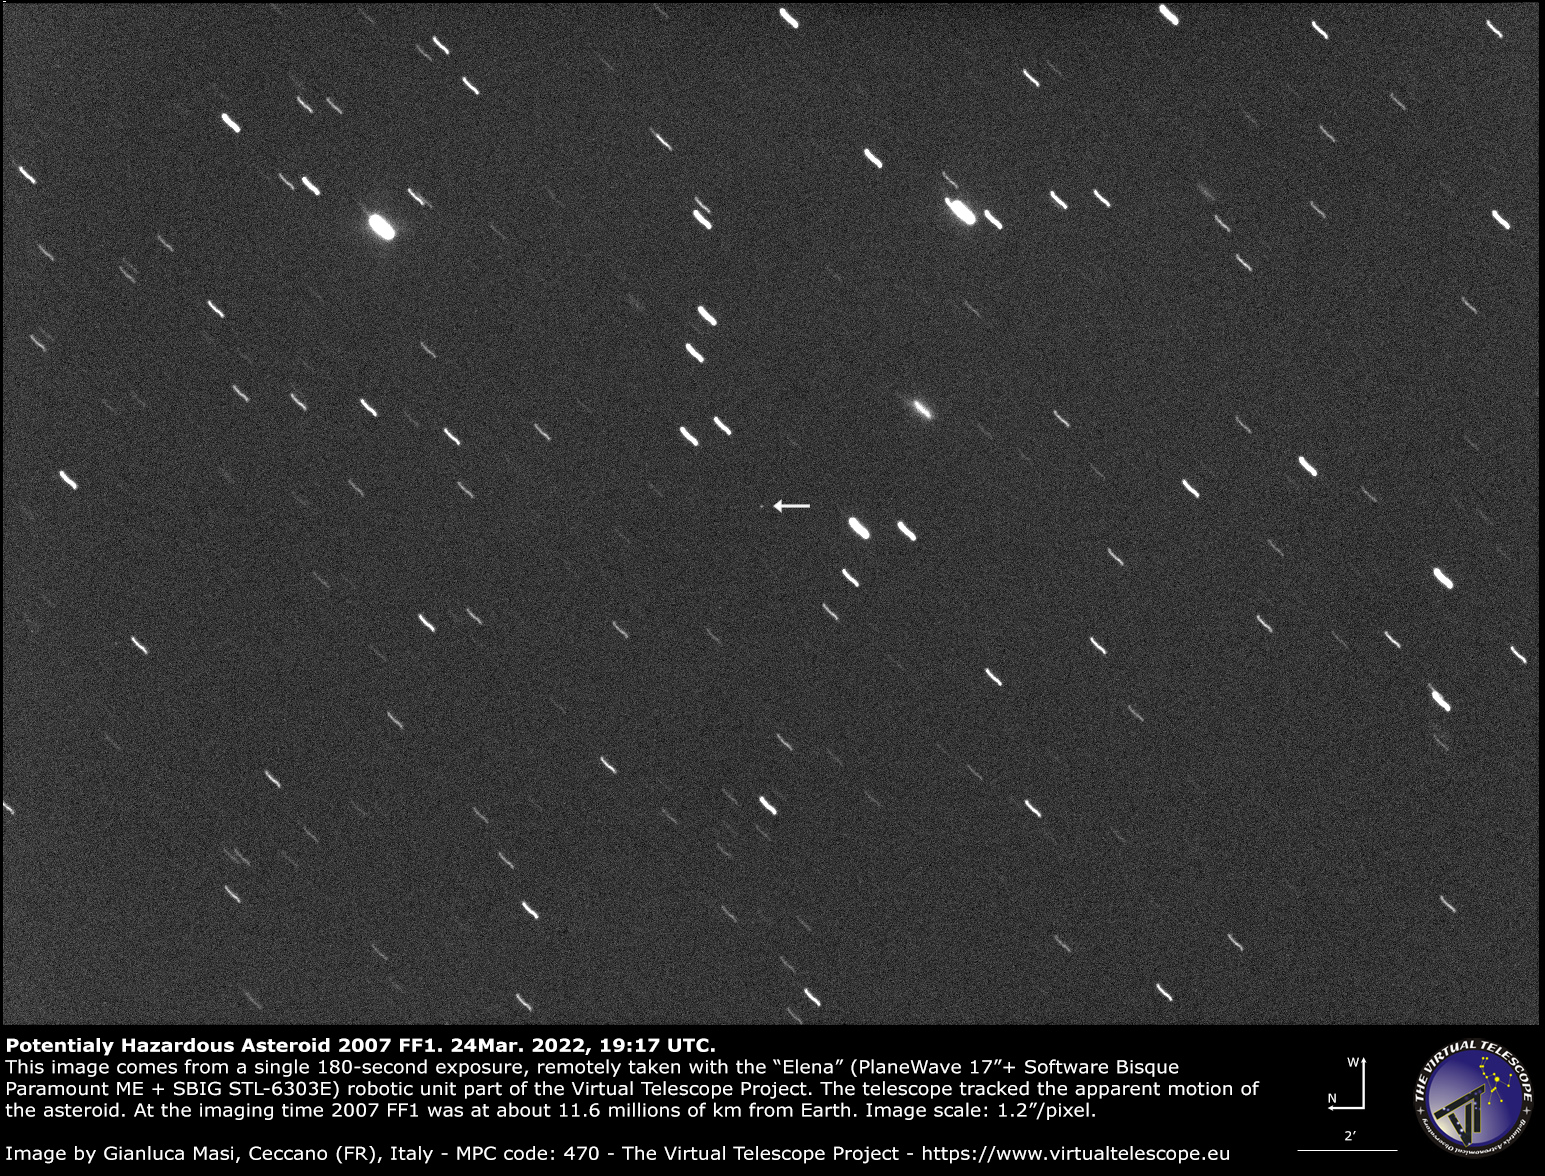 Potentially Hazardous Asteroid 2007 FF1, an image: 24 Mar. 2022.